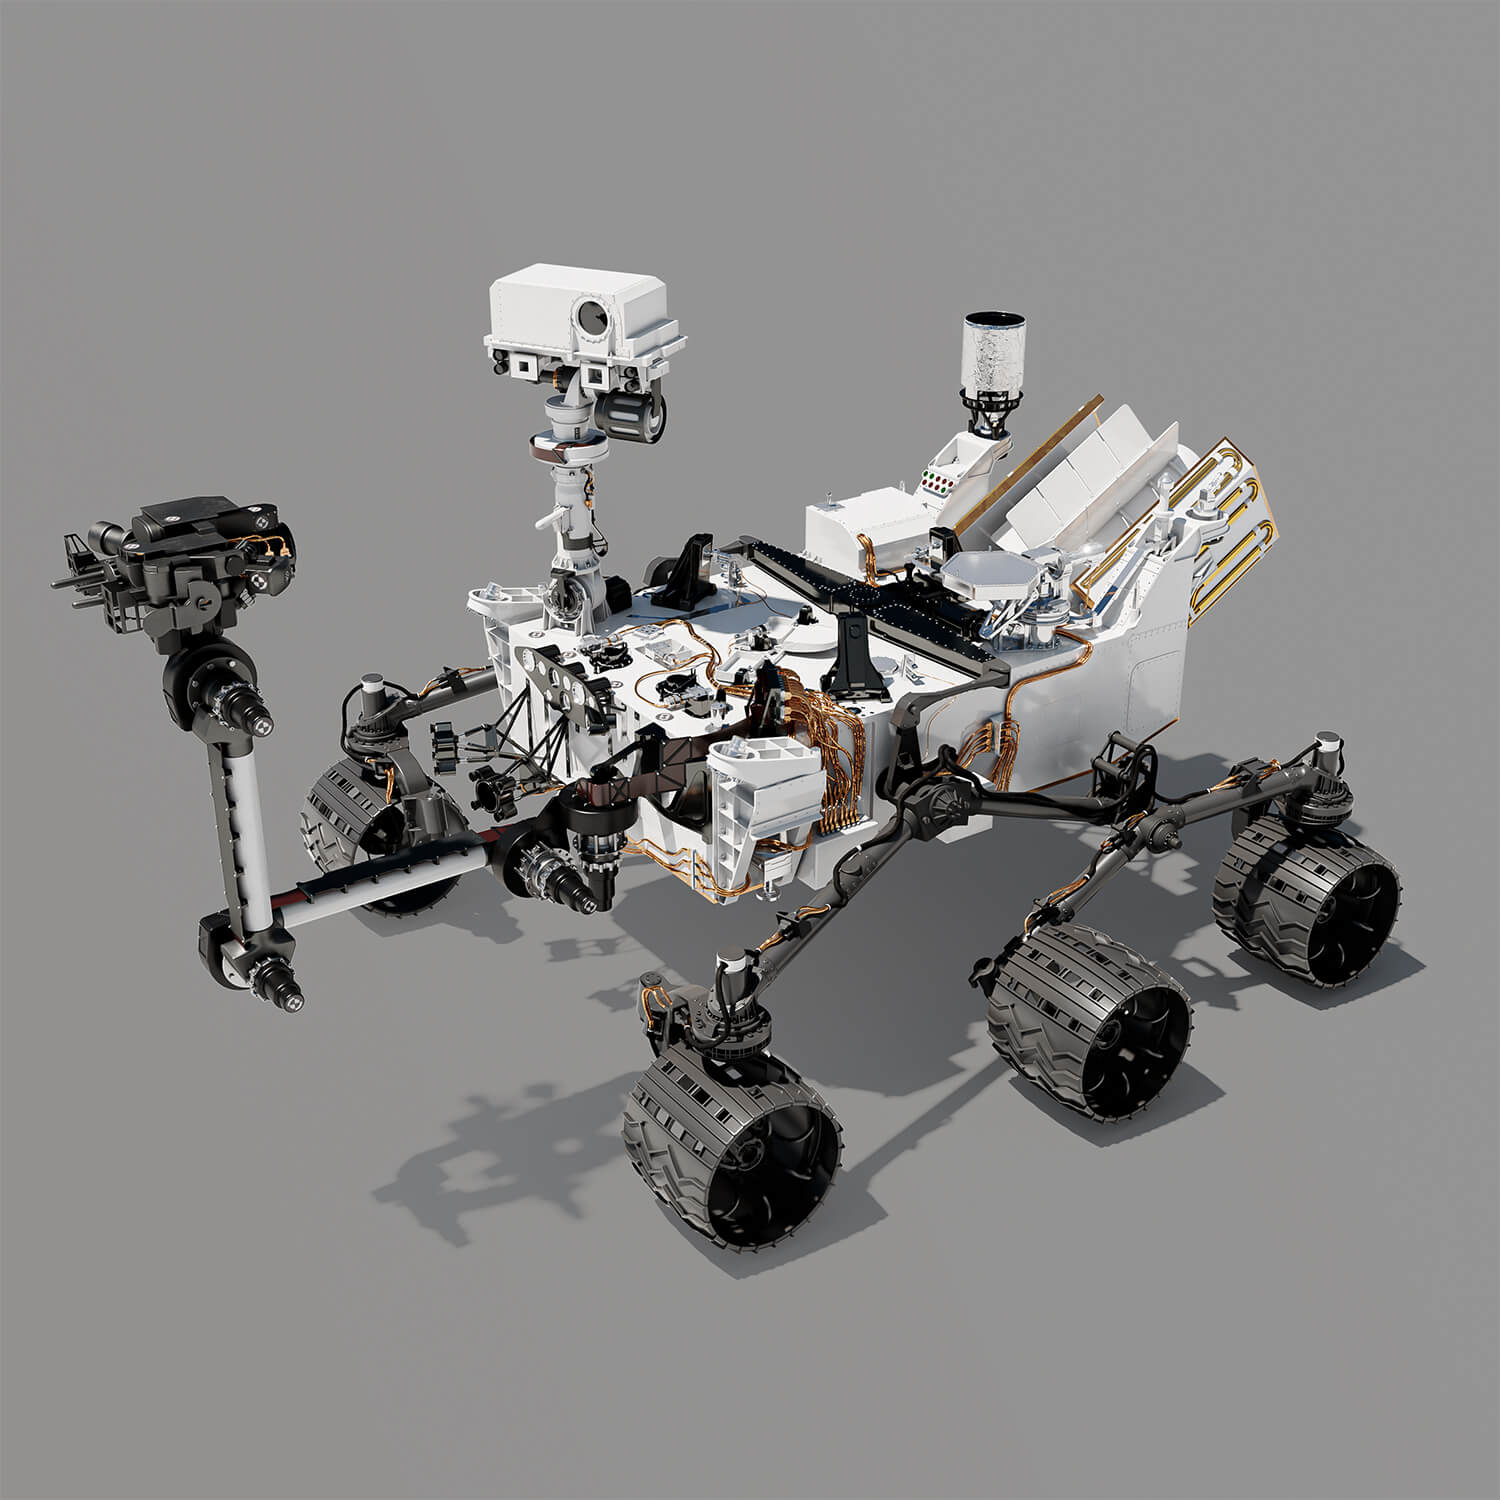 https://mogamma.com.au/wp-content/uploads/2021/02/MAAS-Powerhouse-Case-Study-01-Mars-Rover.jpg